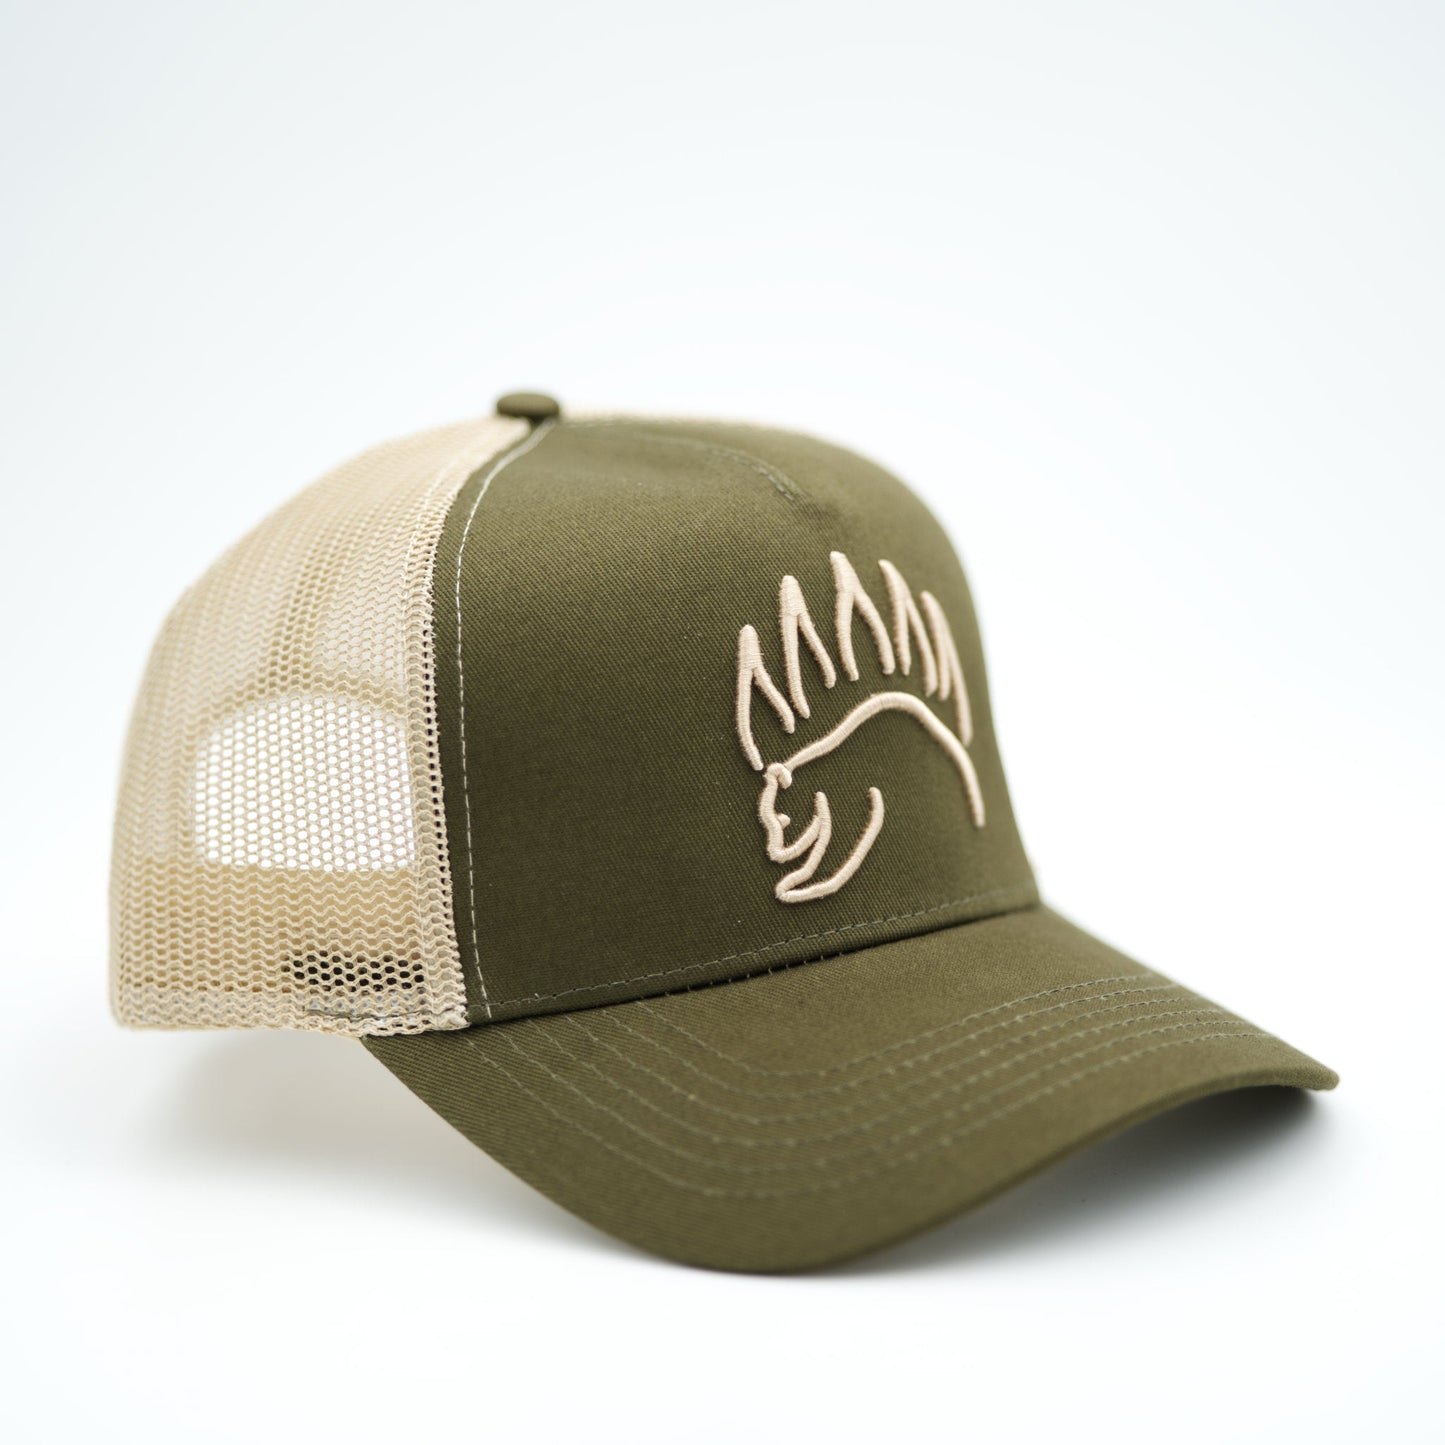 Bear Paw Hat - The Bear Essentials Outdoors Co., Moss Green, Standard Fit,